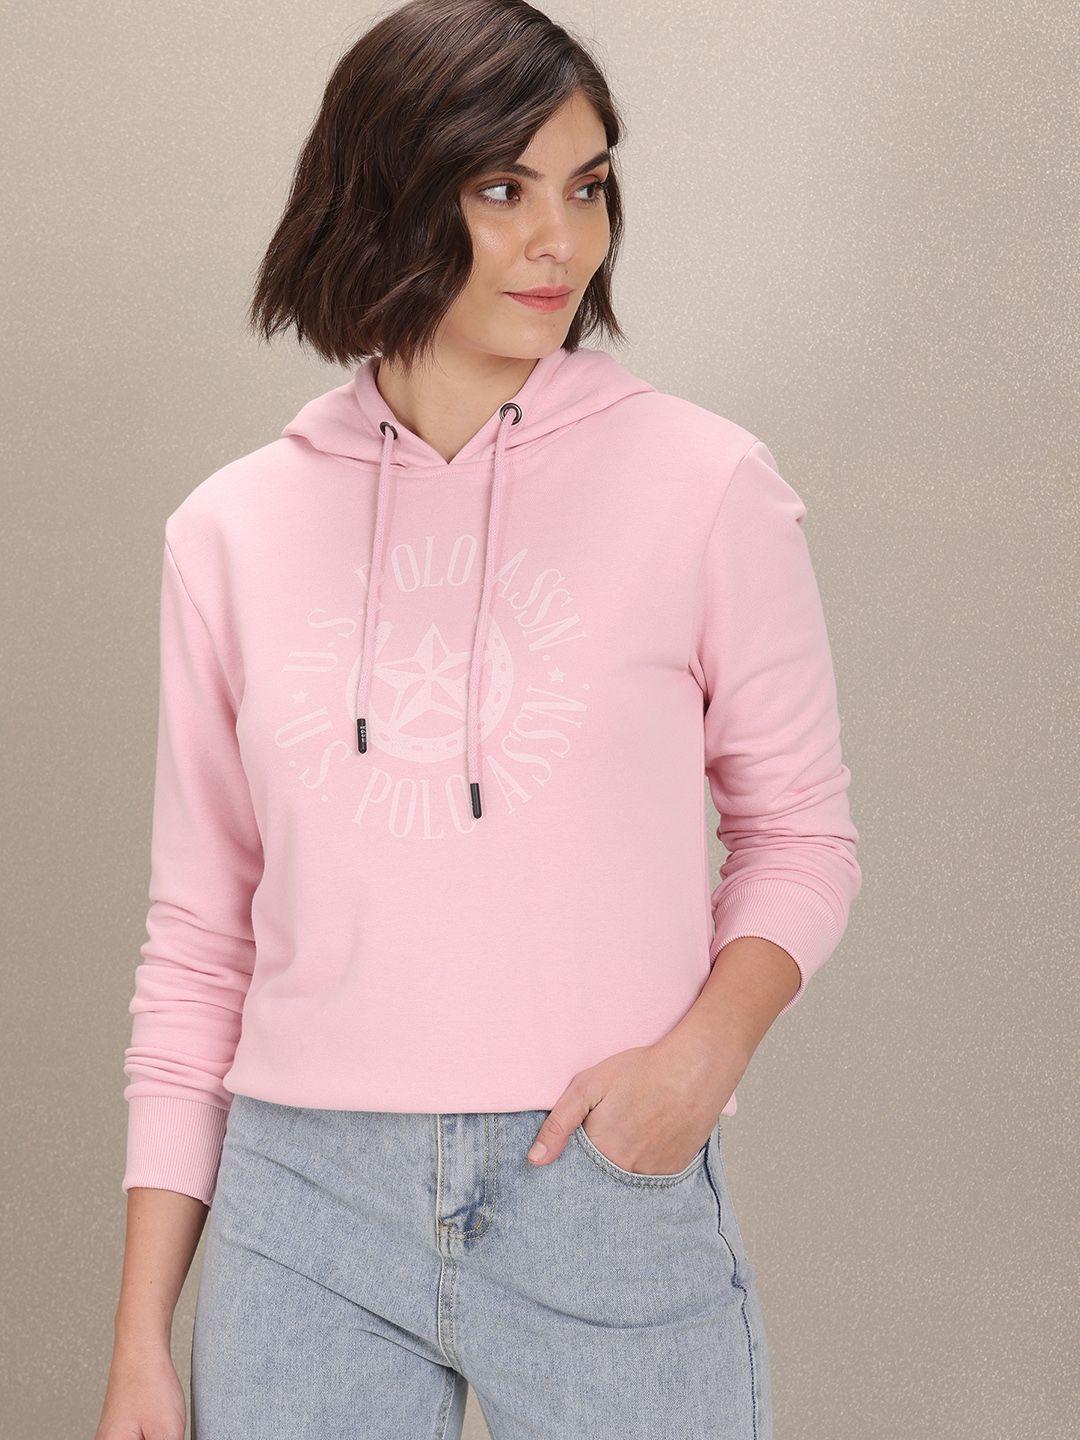 u s polo assn women women pink printed hooded sweatshirt